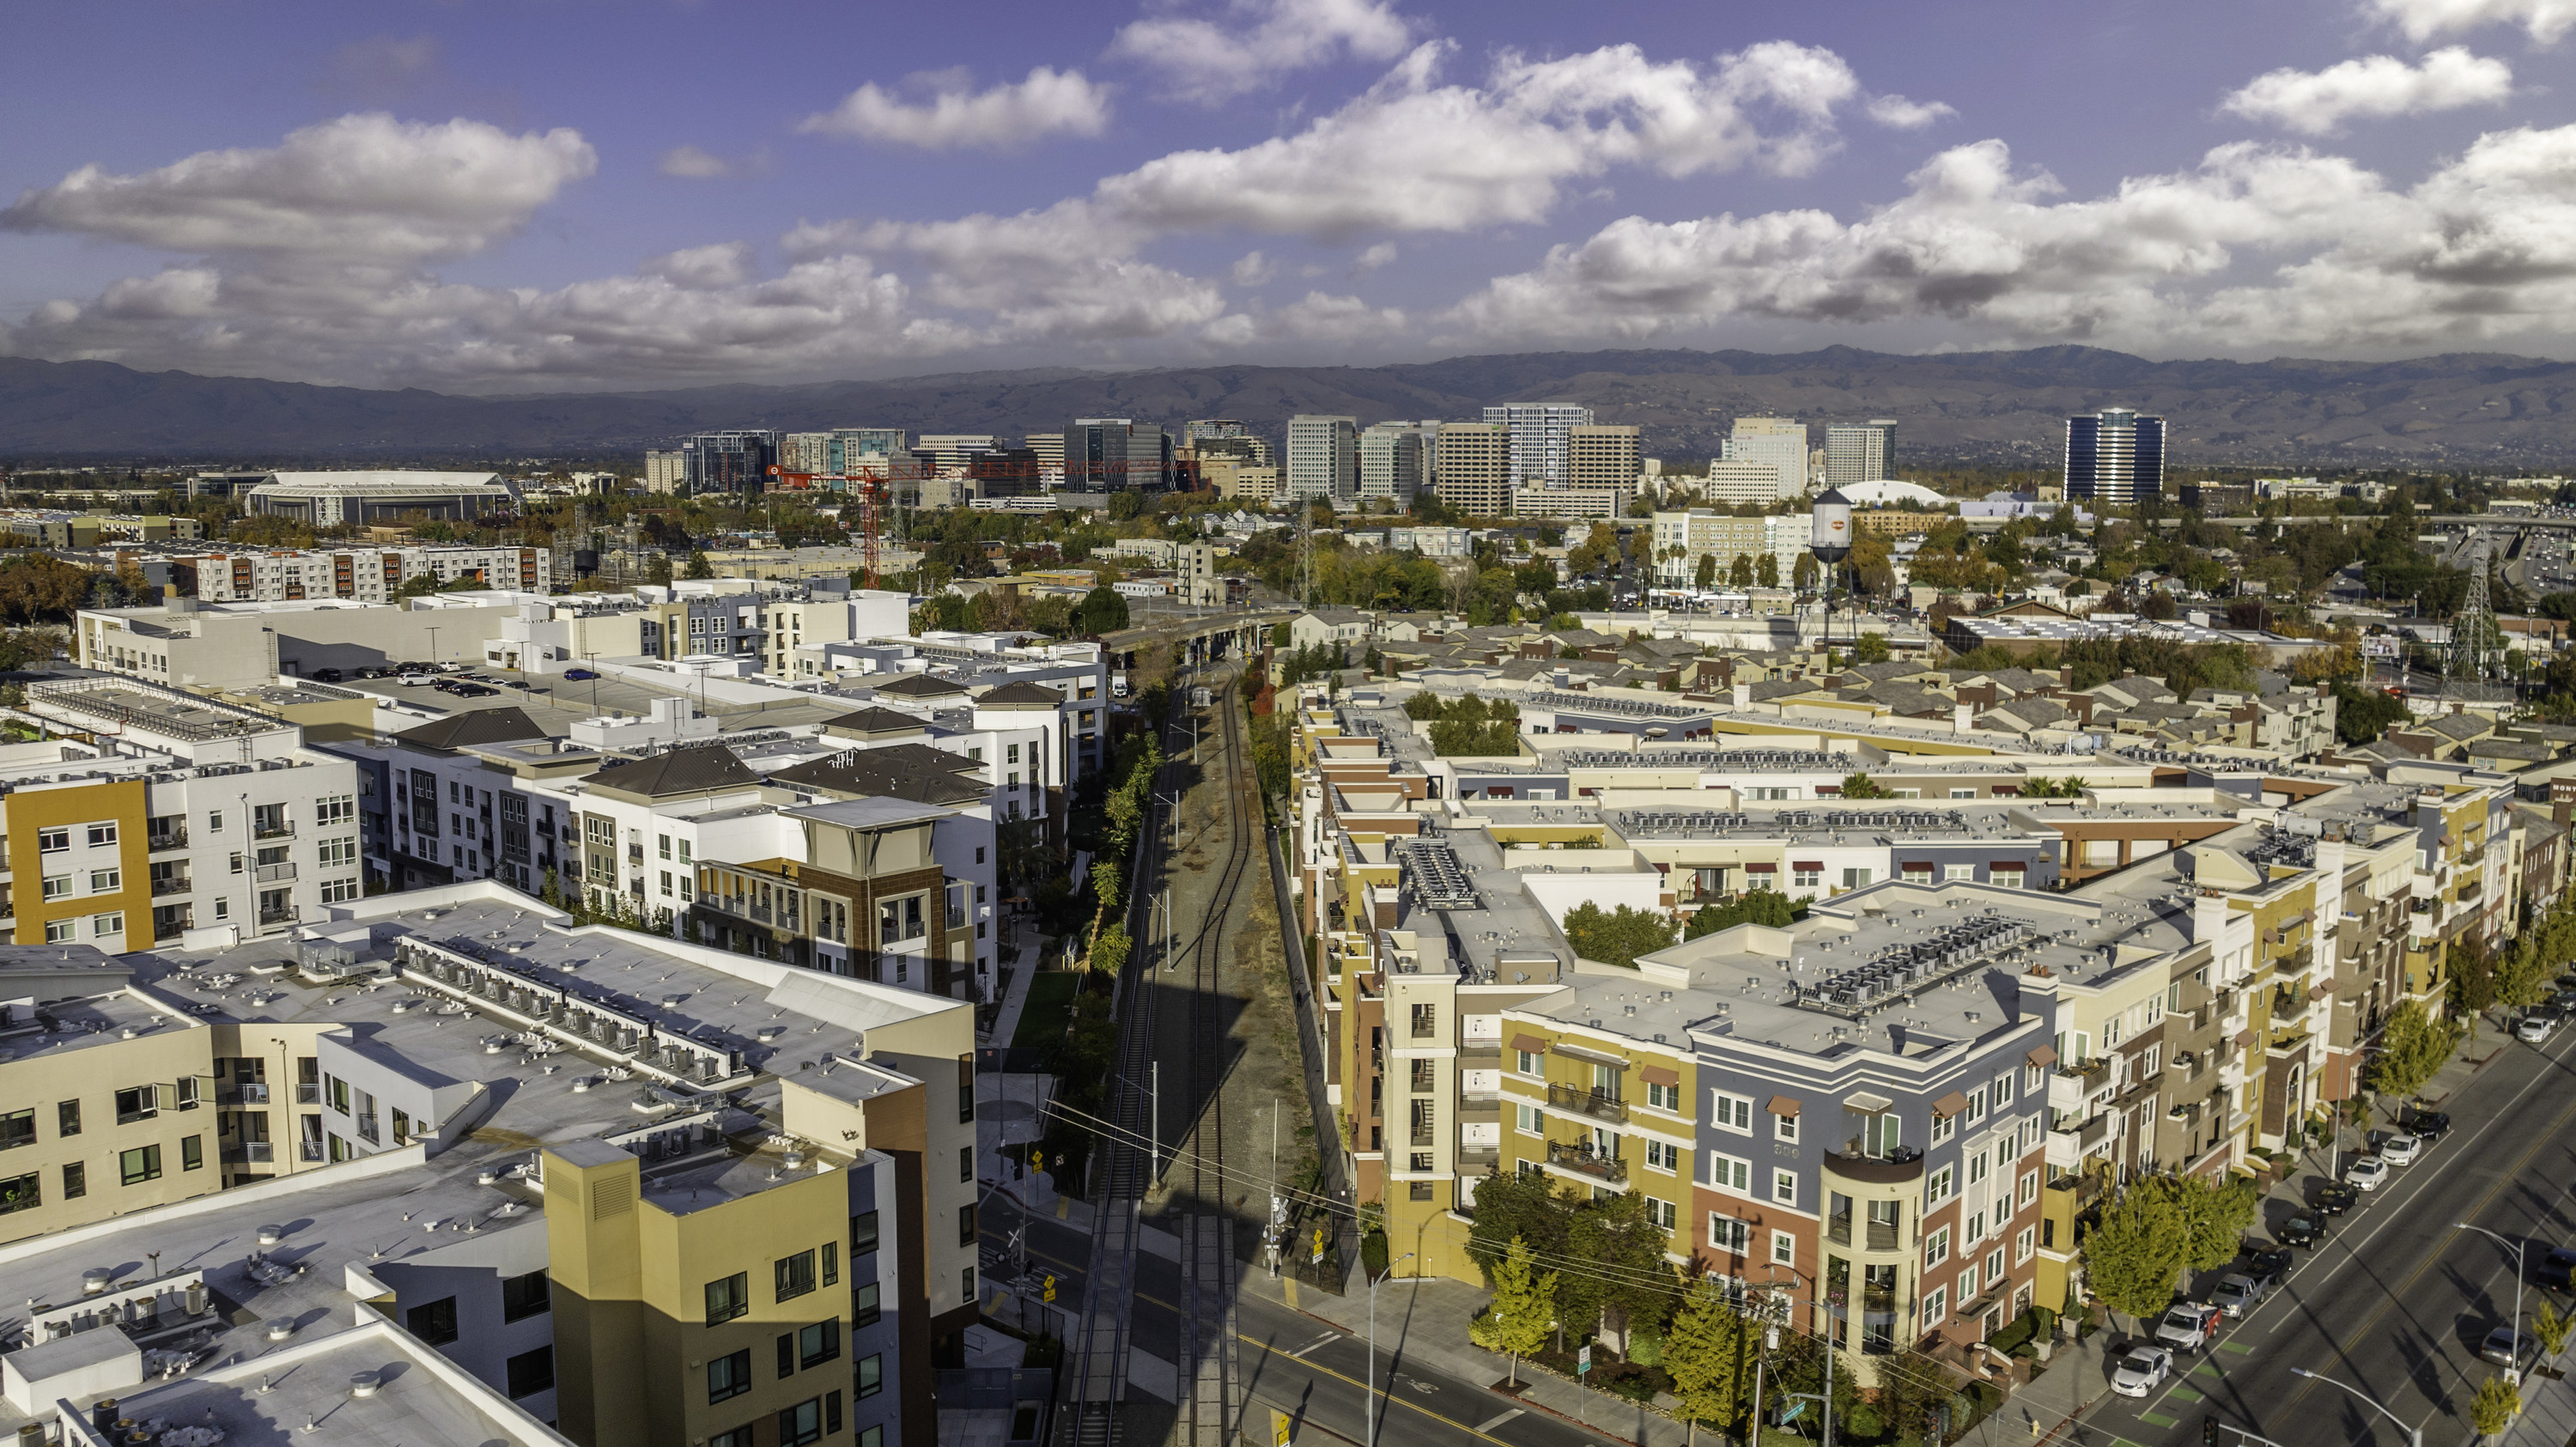 High quality aerial stock photos of downtown San Jose California